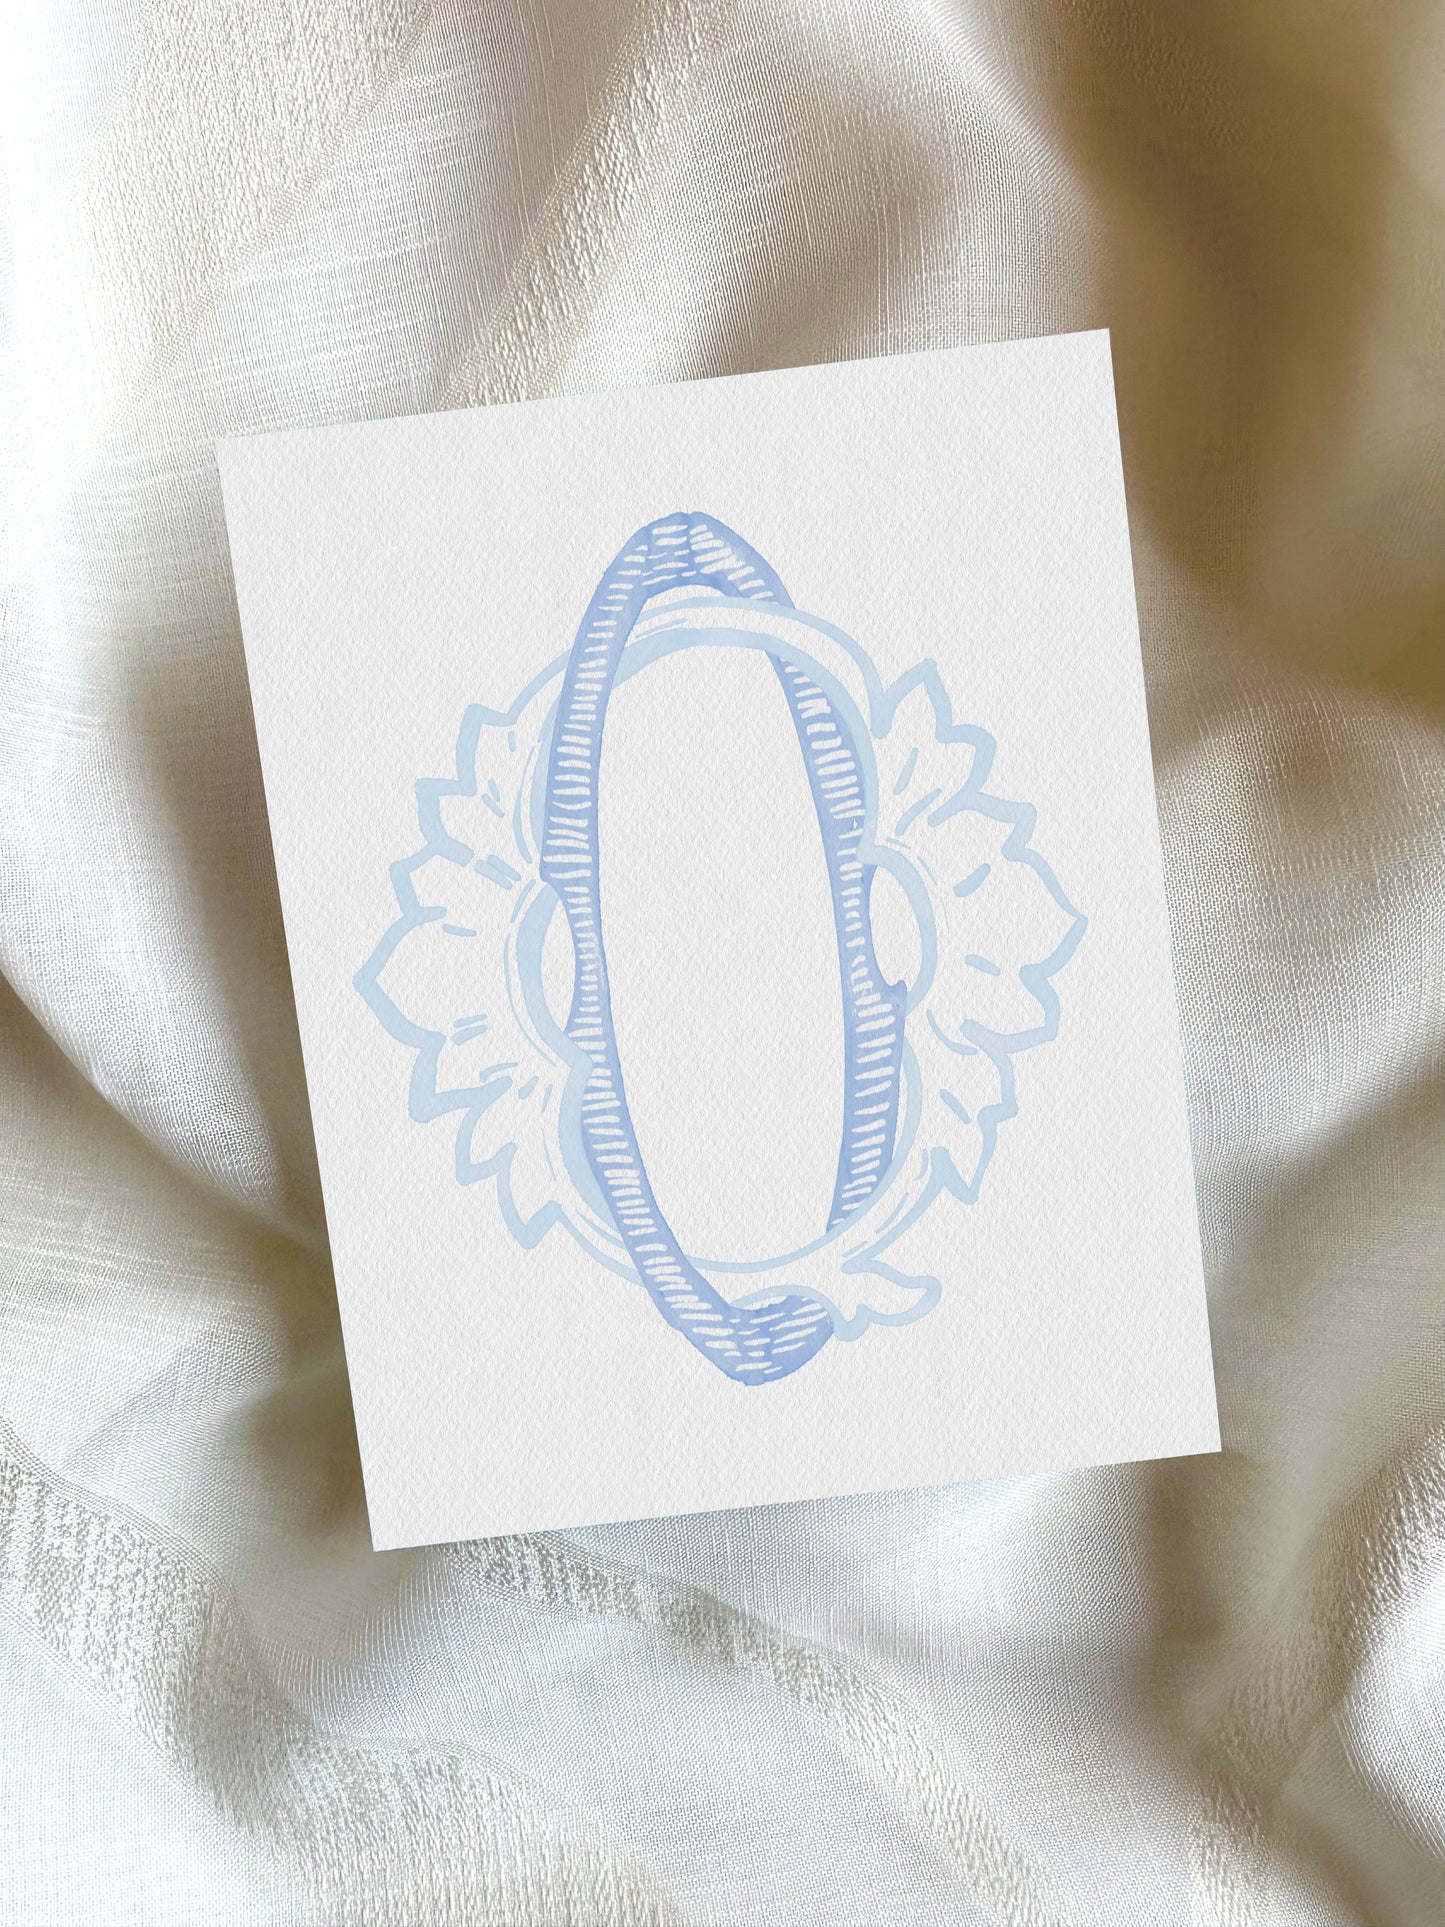 2 Letter Monogram with Letters OQ QO  | Digital Download - Wedding Monogram SVG, Personal Logo, Wedding Logo for Wedding Invitations The Wedding Crest Lab